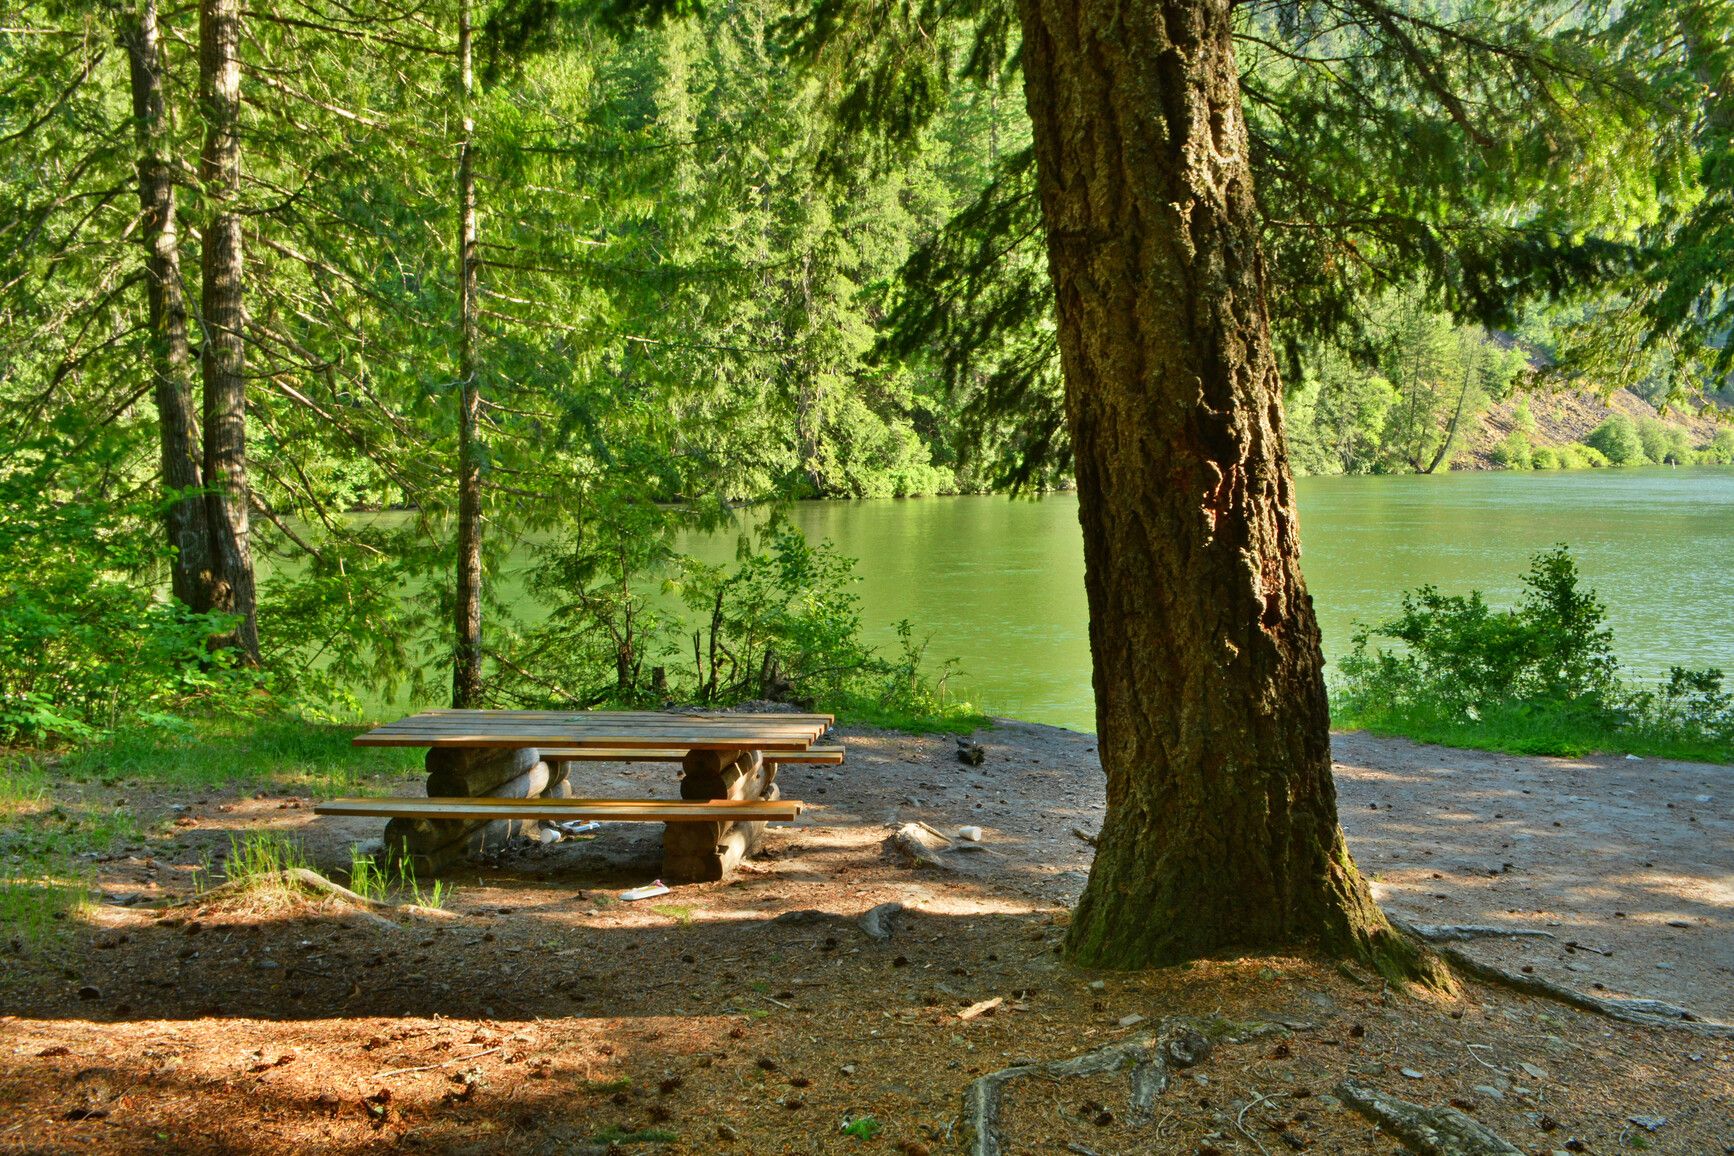 A rustic campsite near the lake in Nahatlatch Park.